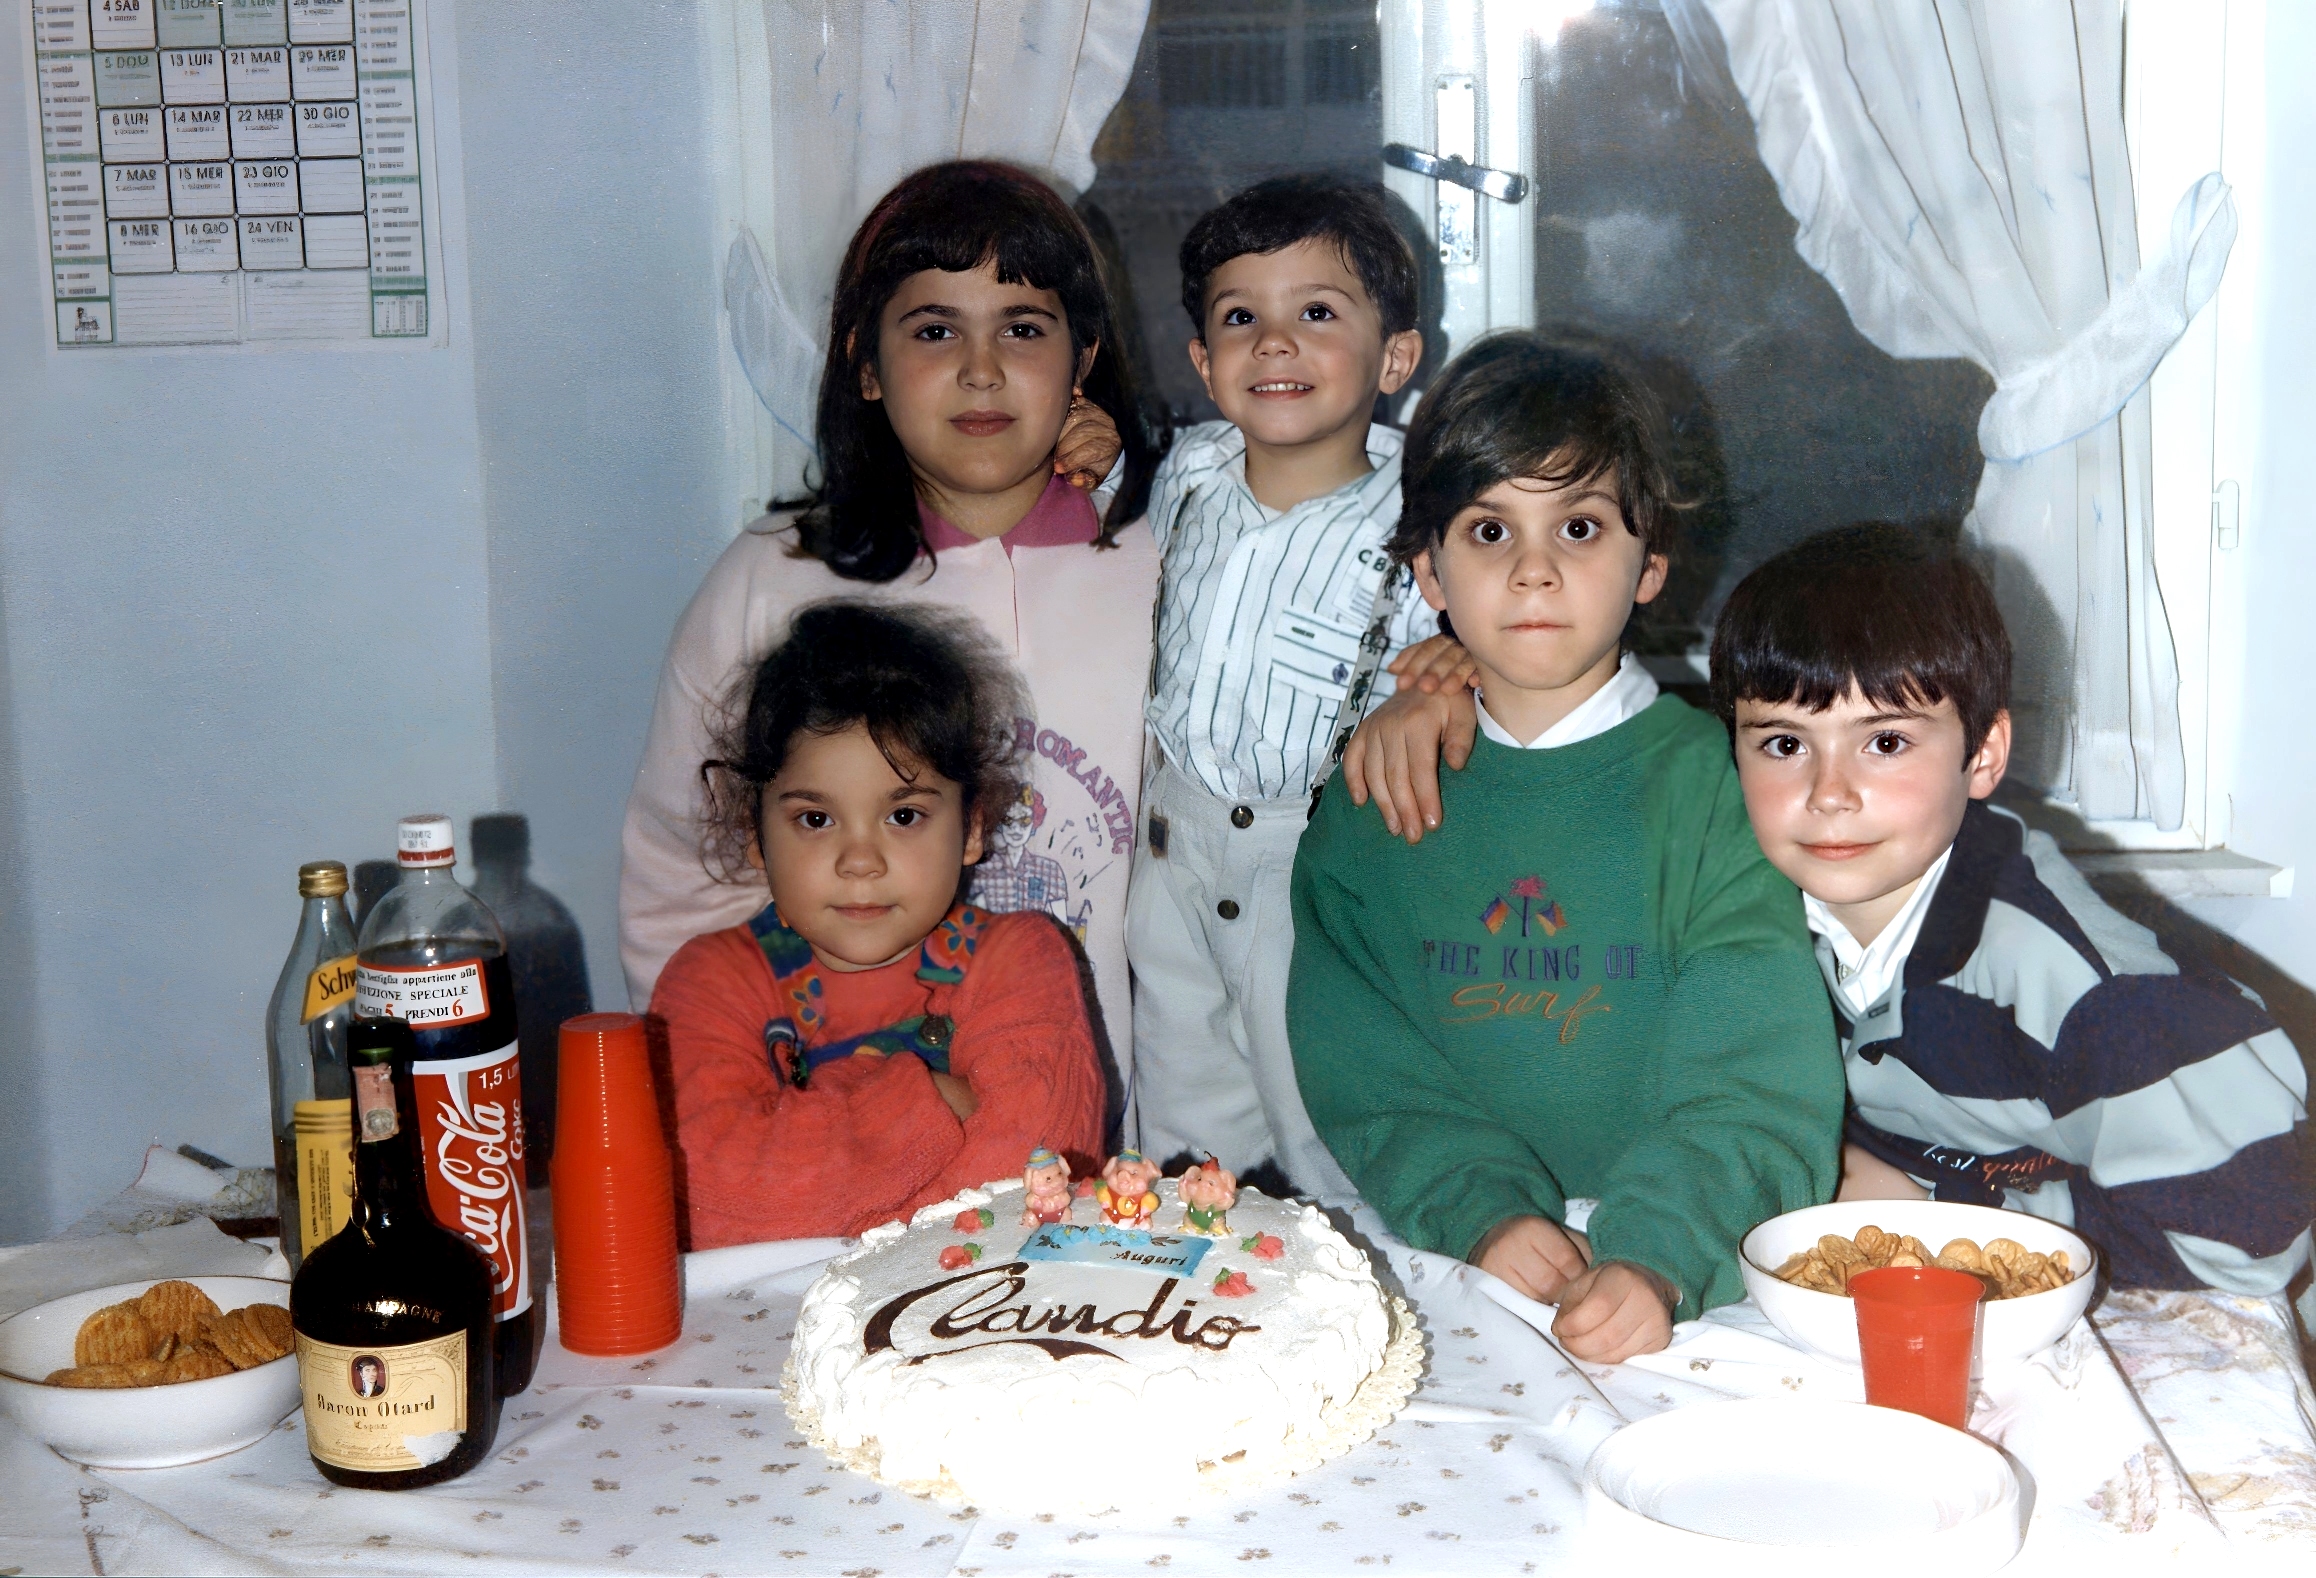  25 aprile 1992  - Sabaudia (LT) - C.so V.Emanuele III,69: D'Amario Alessandra, Barricelli Valeria, Roggio Claudio, D'Amario Alessio e Roggio Fausto. 